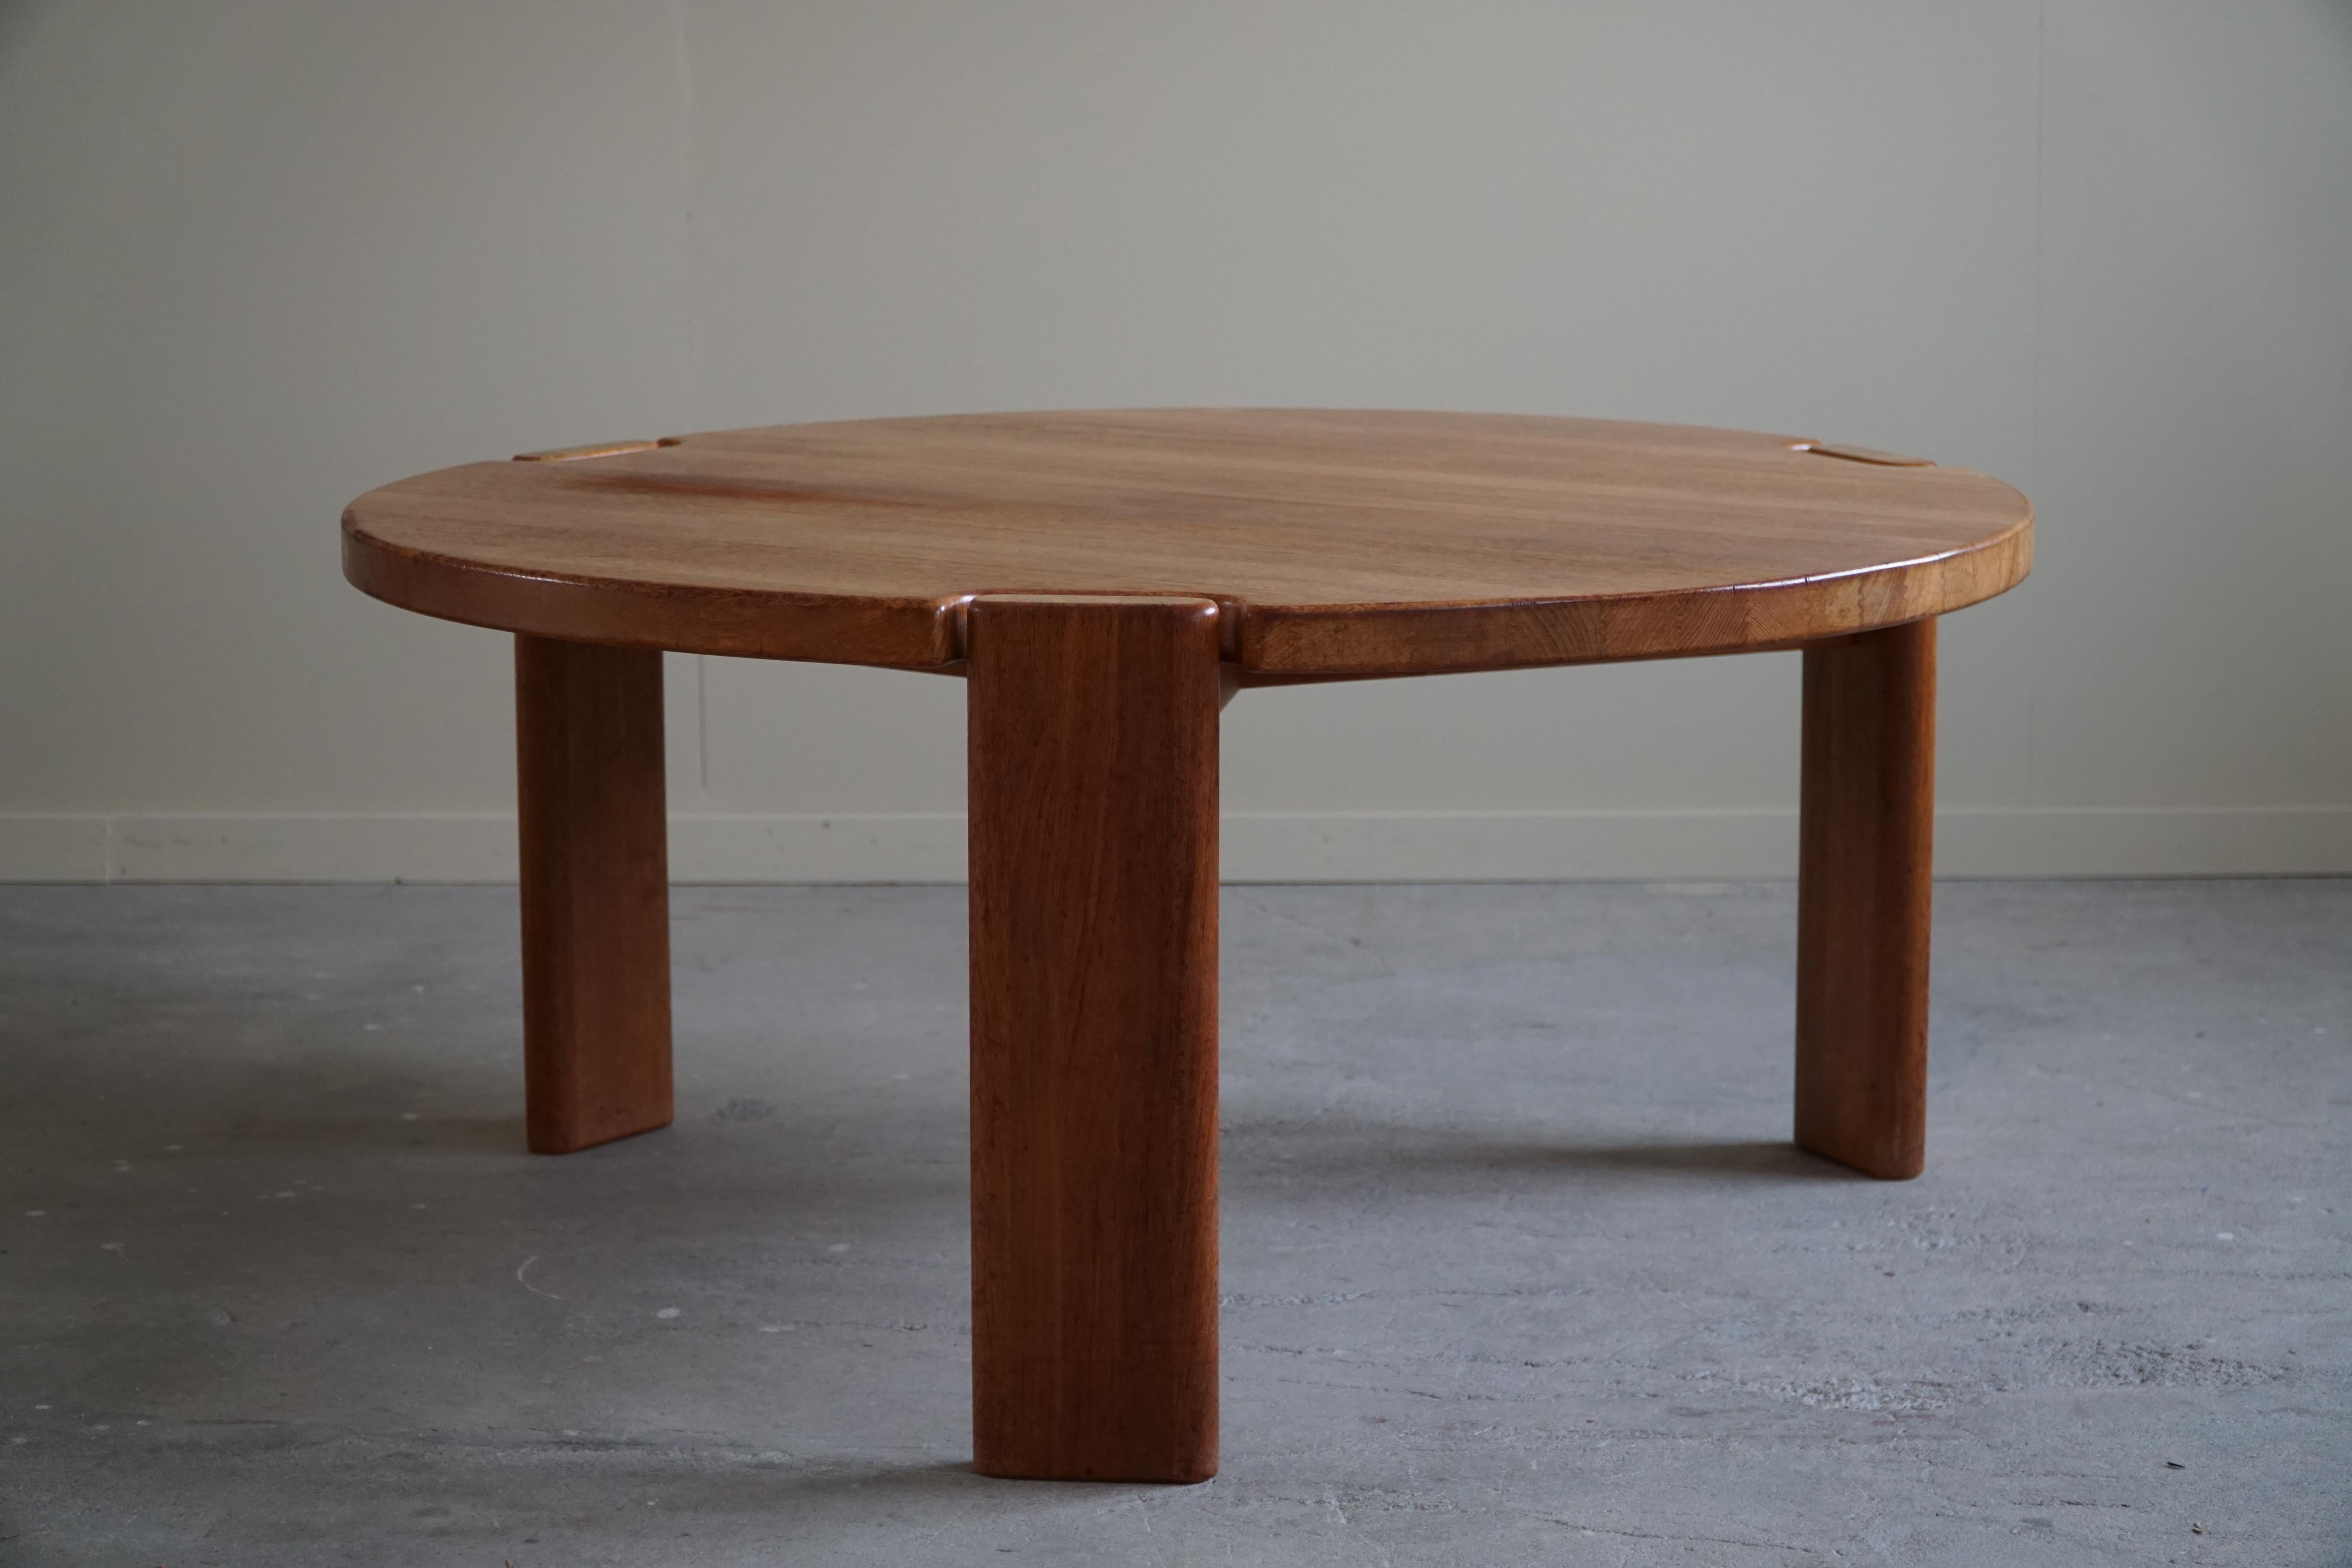 Round Sofa / Coffee Table in Teak, By Komfort, Danish Mid Century Modern, 1960s For Sale 2